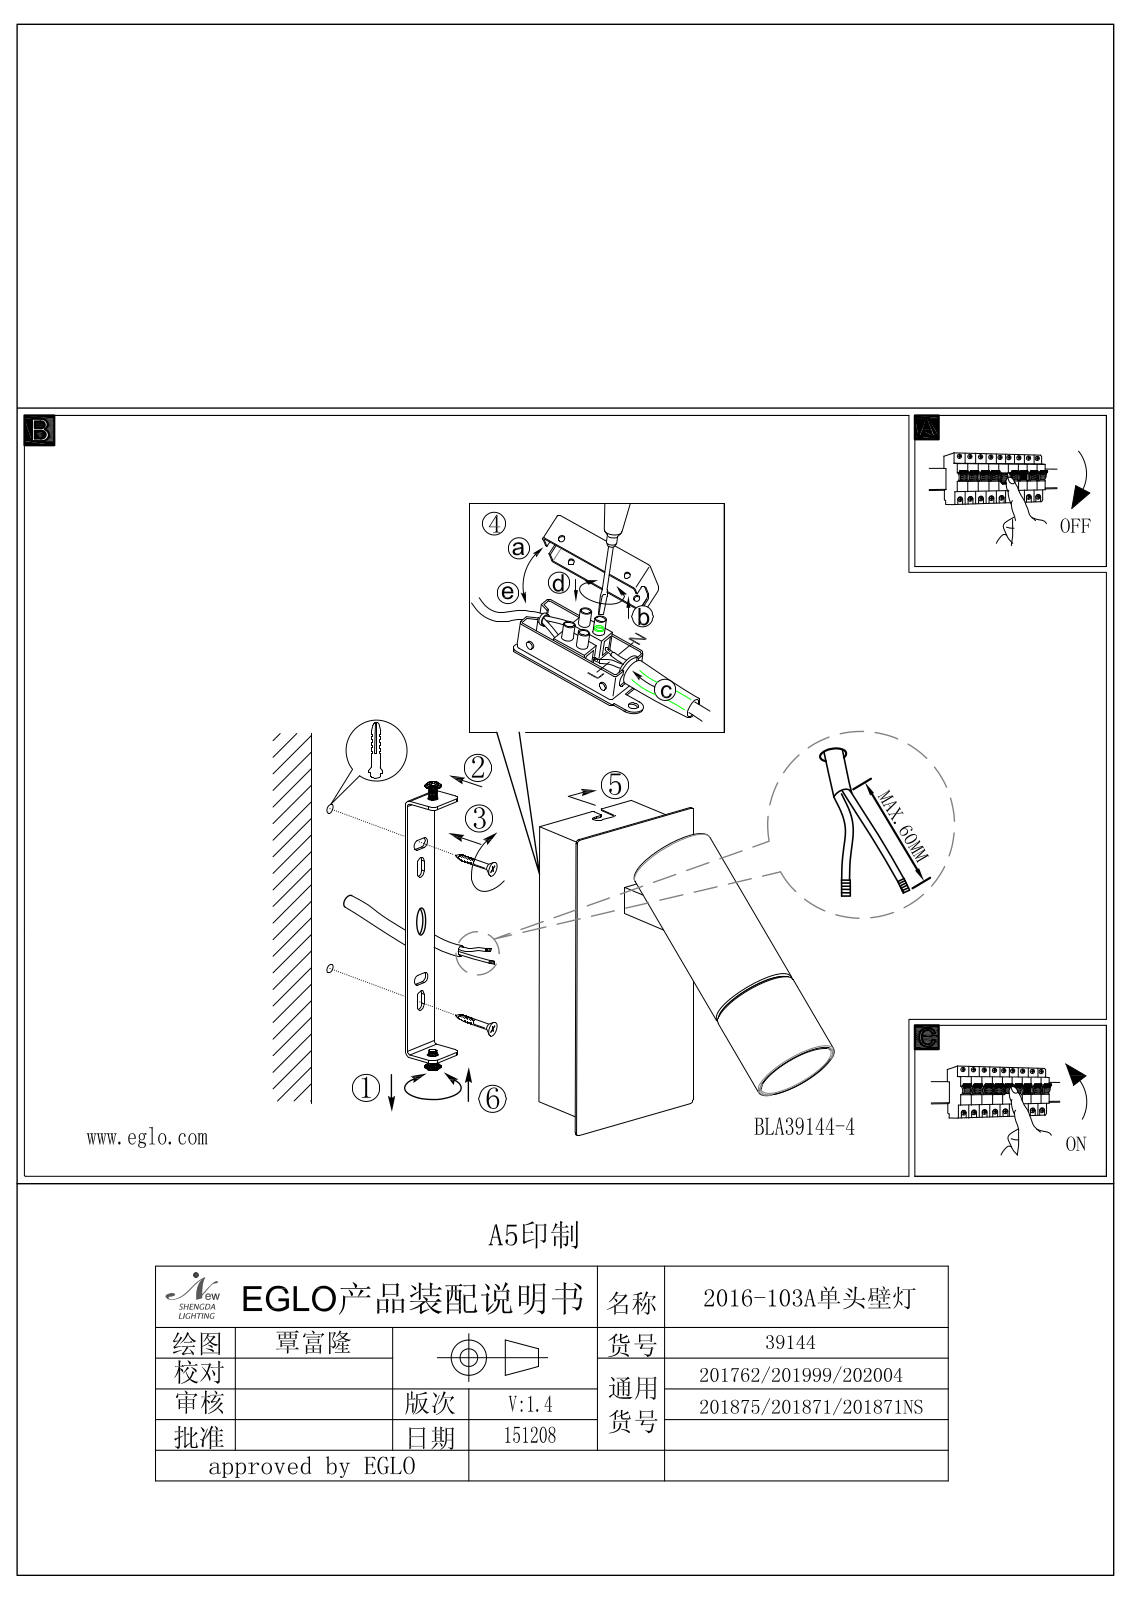 Eglo 39144 Service Manual